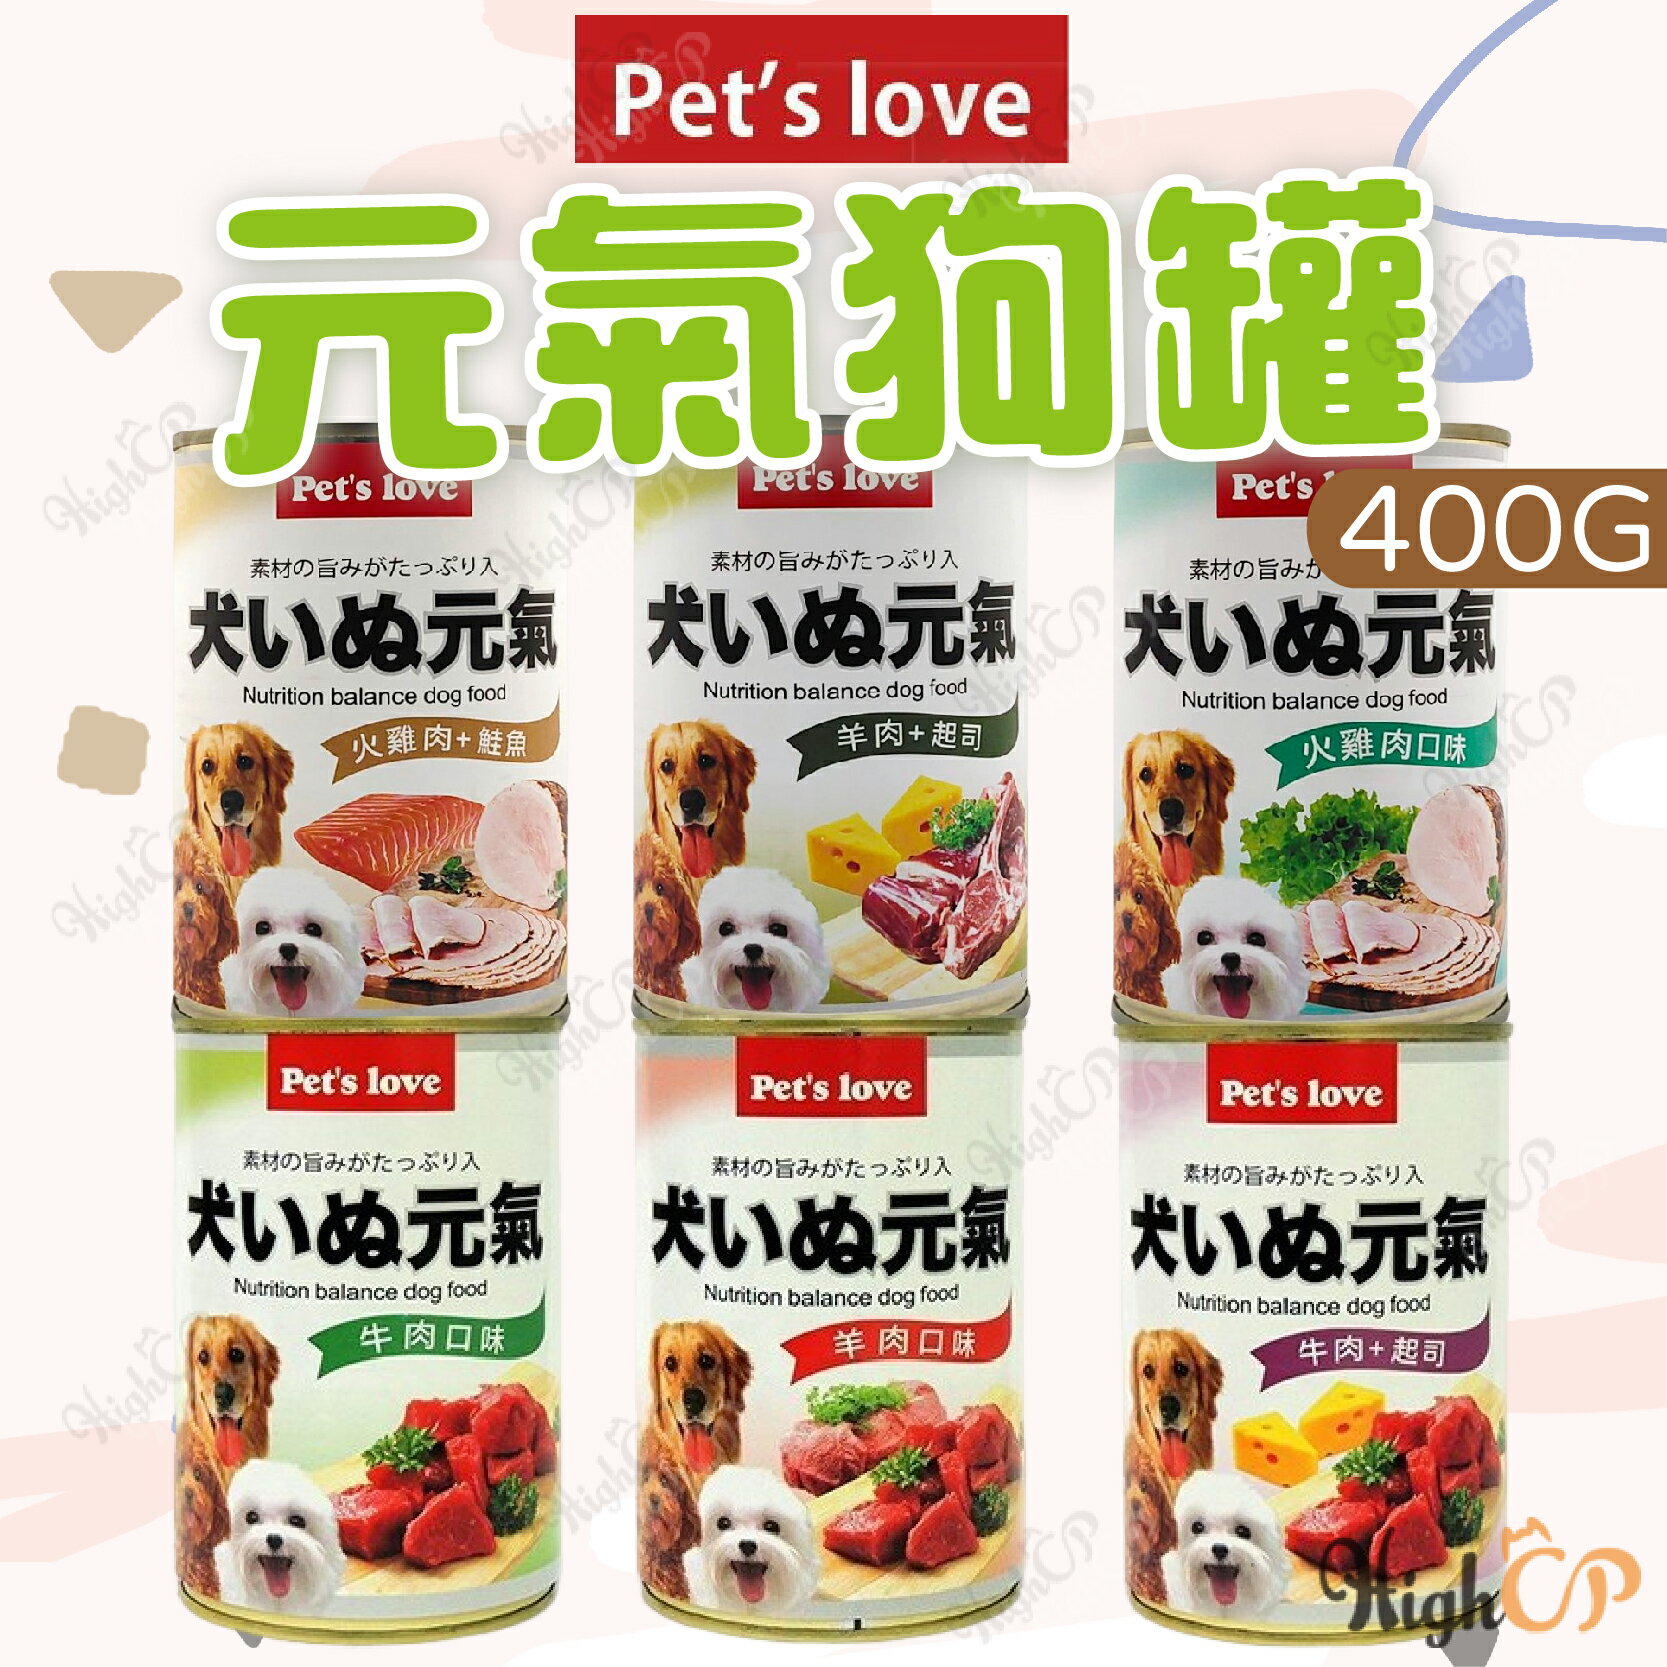 Pet's love 元氣犬罐 400g 牛肉 起司 羊肉 火雞肉 鮭魚 狗罐頭 犬罐頭 寵物食品【230903】